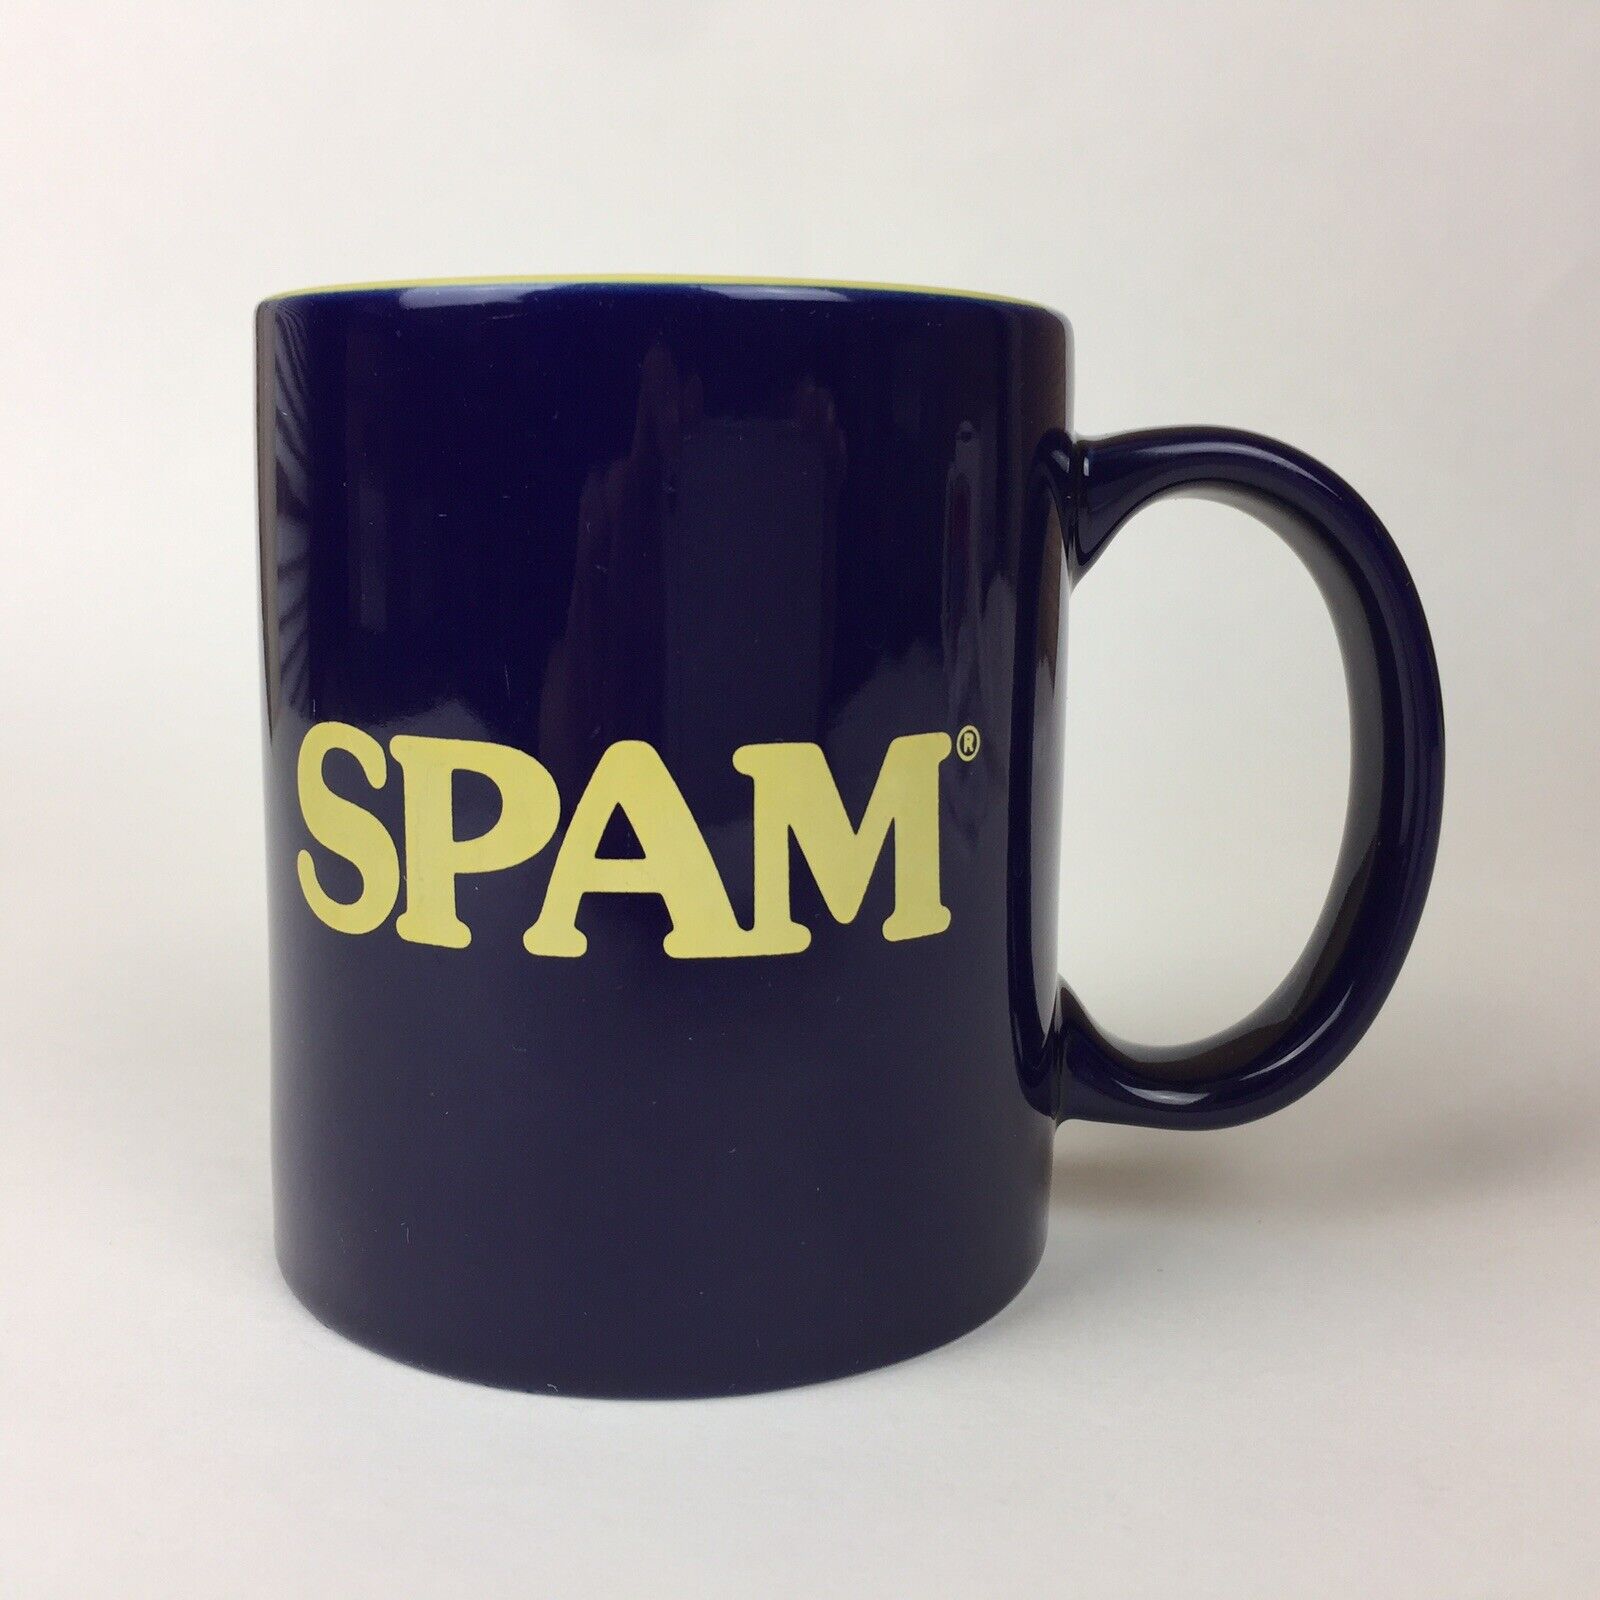 Spam Coffee Tea Cup Mug Dark Blue & Yellow 3.75” Tall Approx. 10 fl. oz. Used